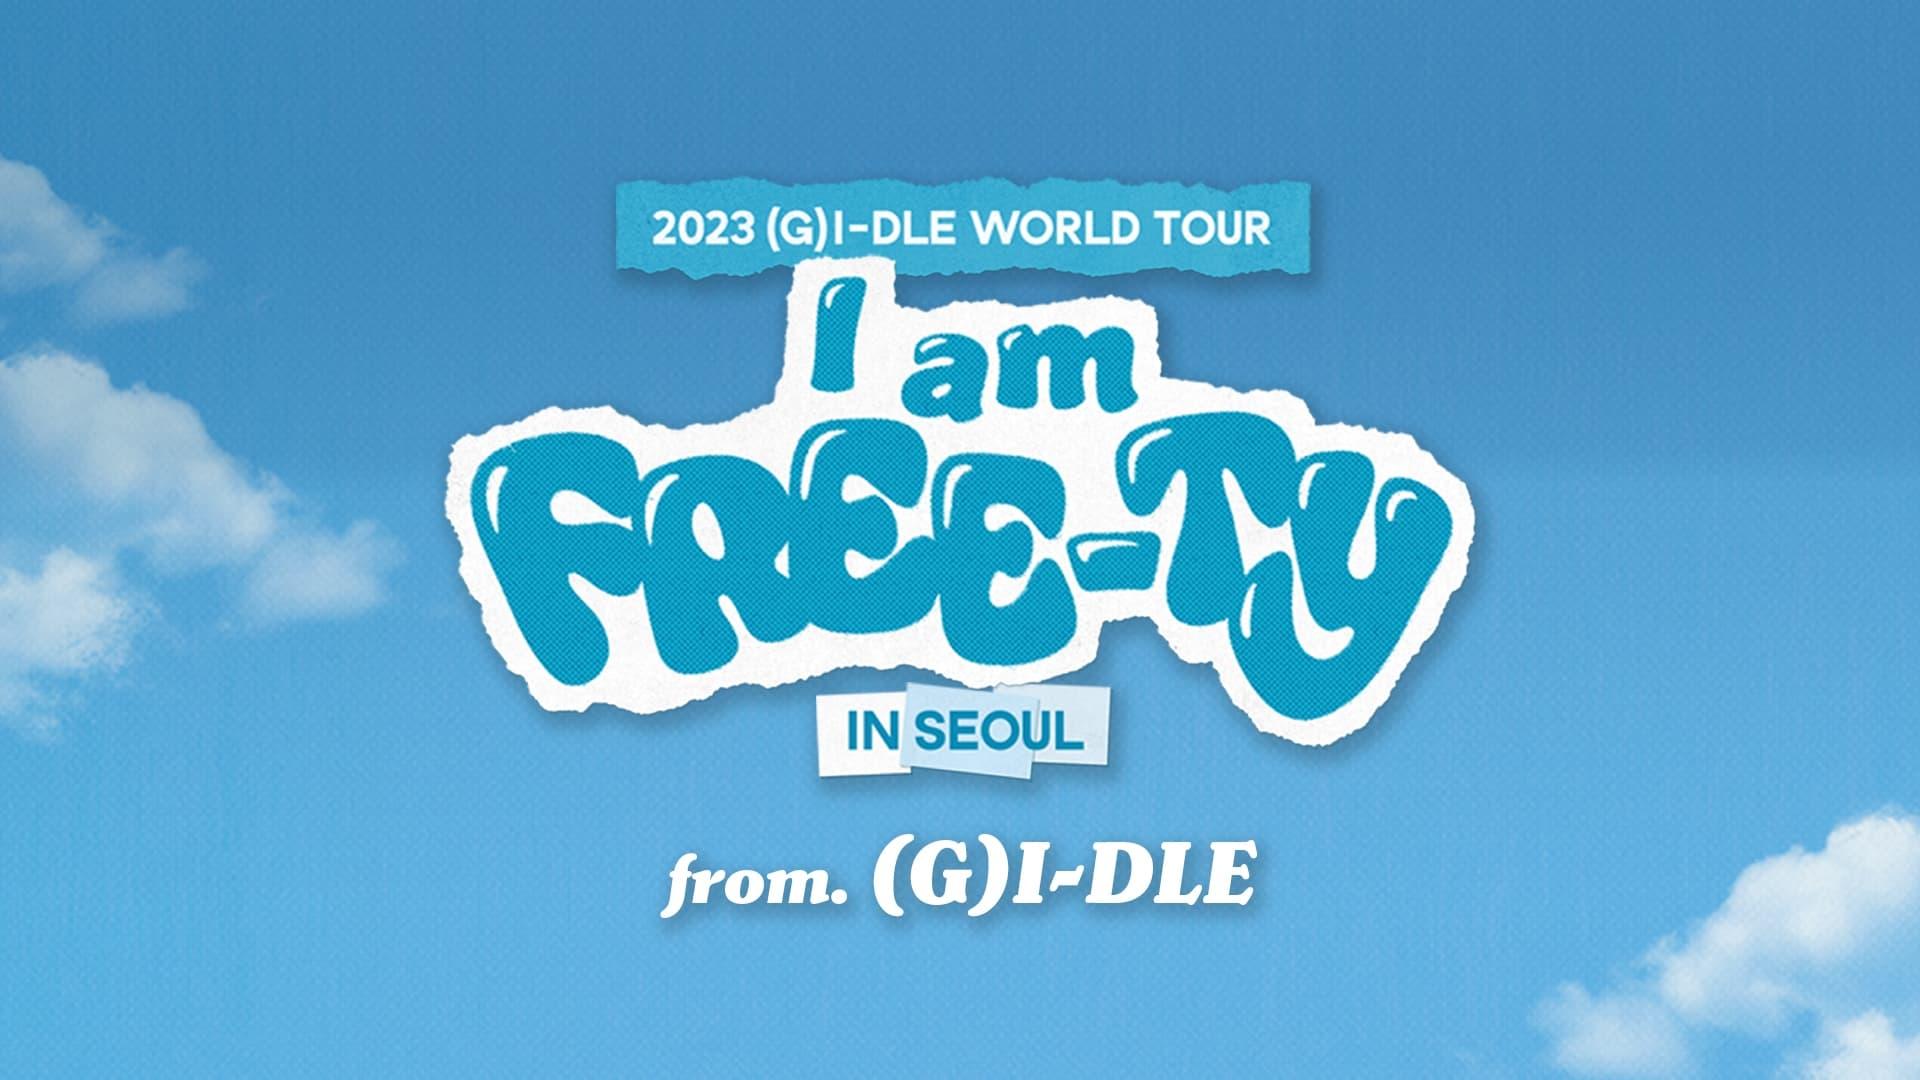 2023 (G)I-DLE World Tour: I am FREE-TY in Seoul backdrop